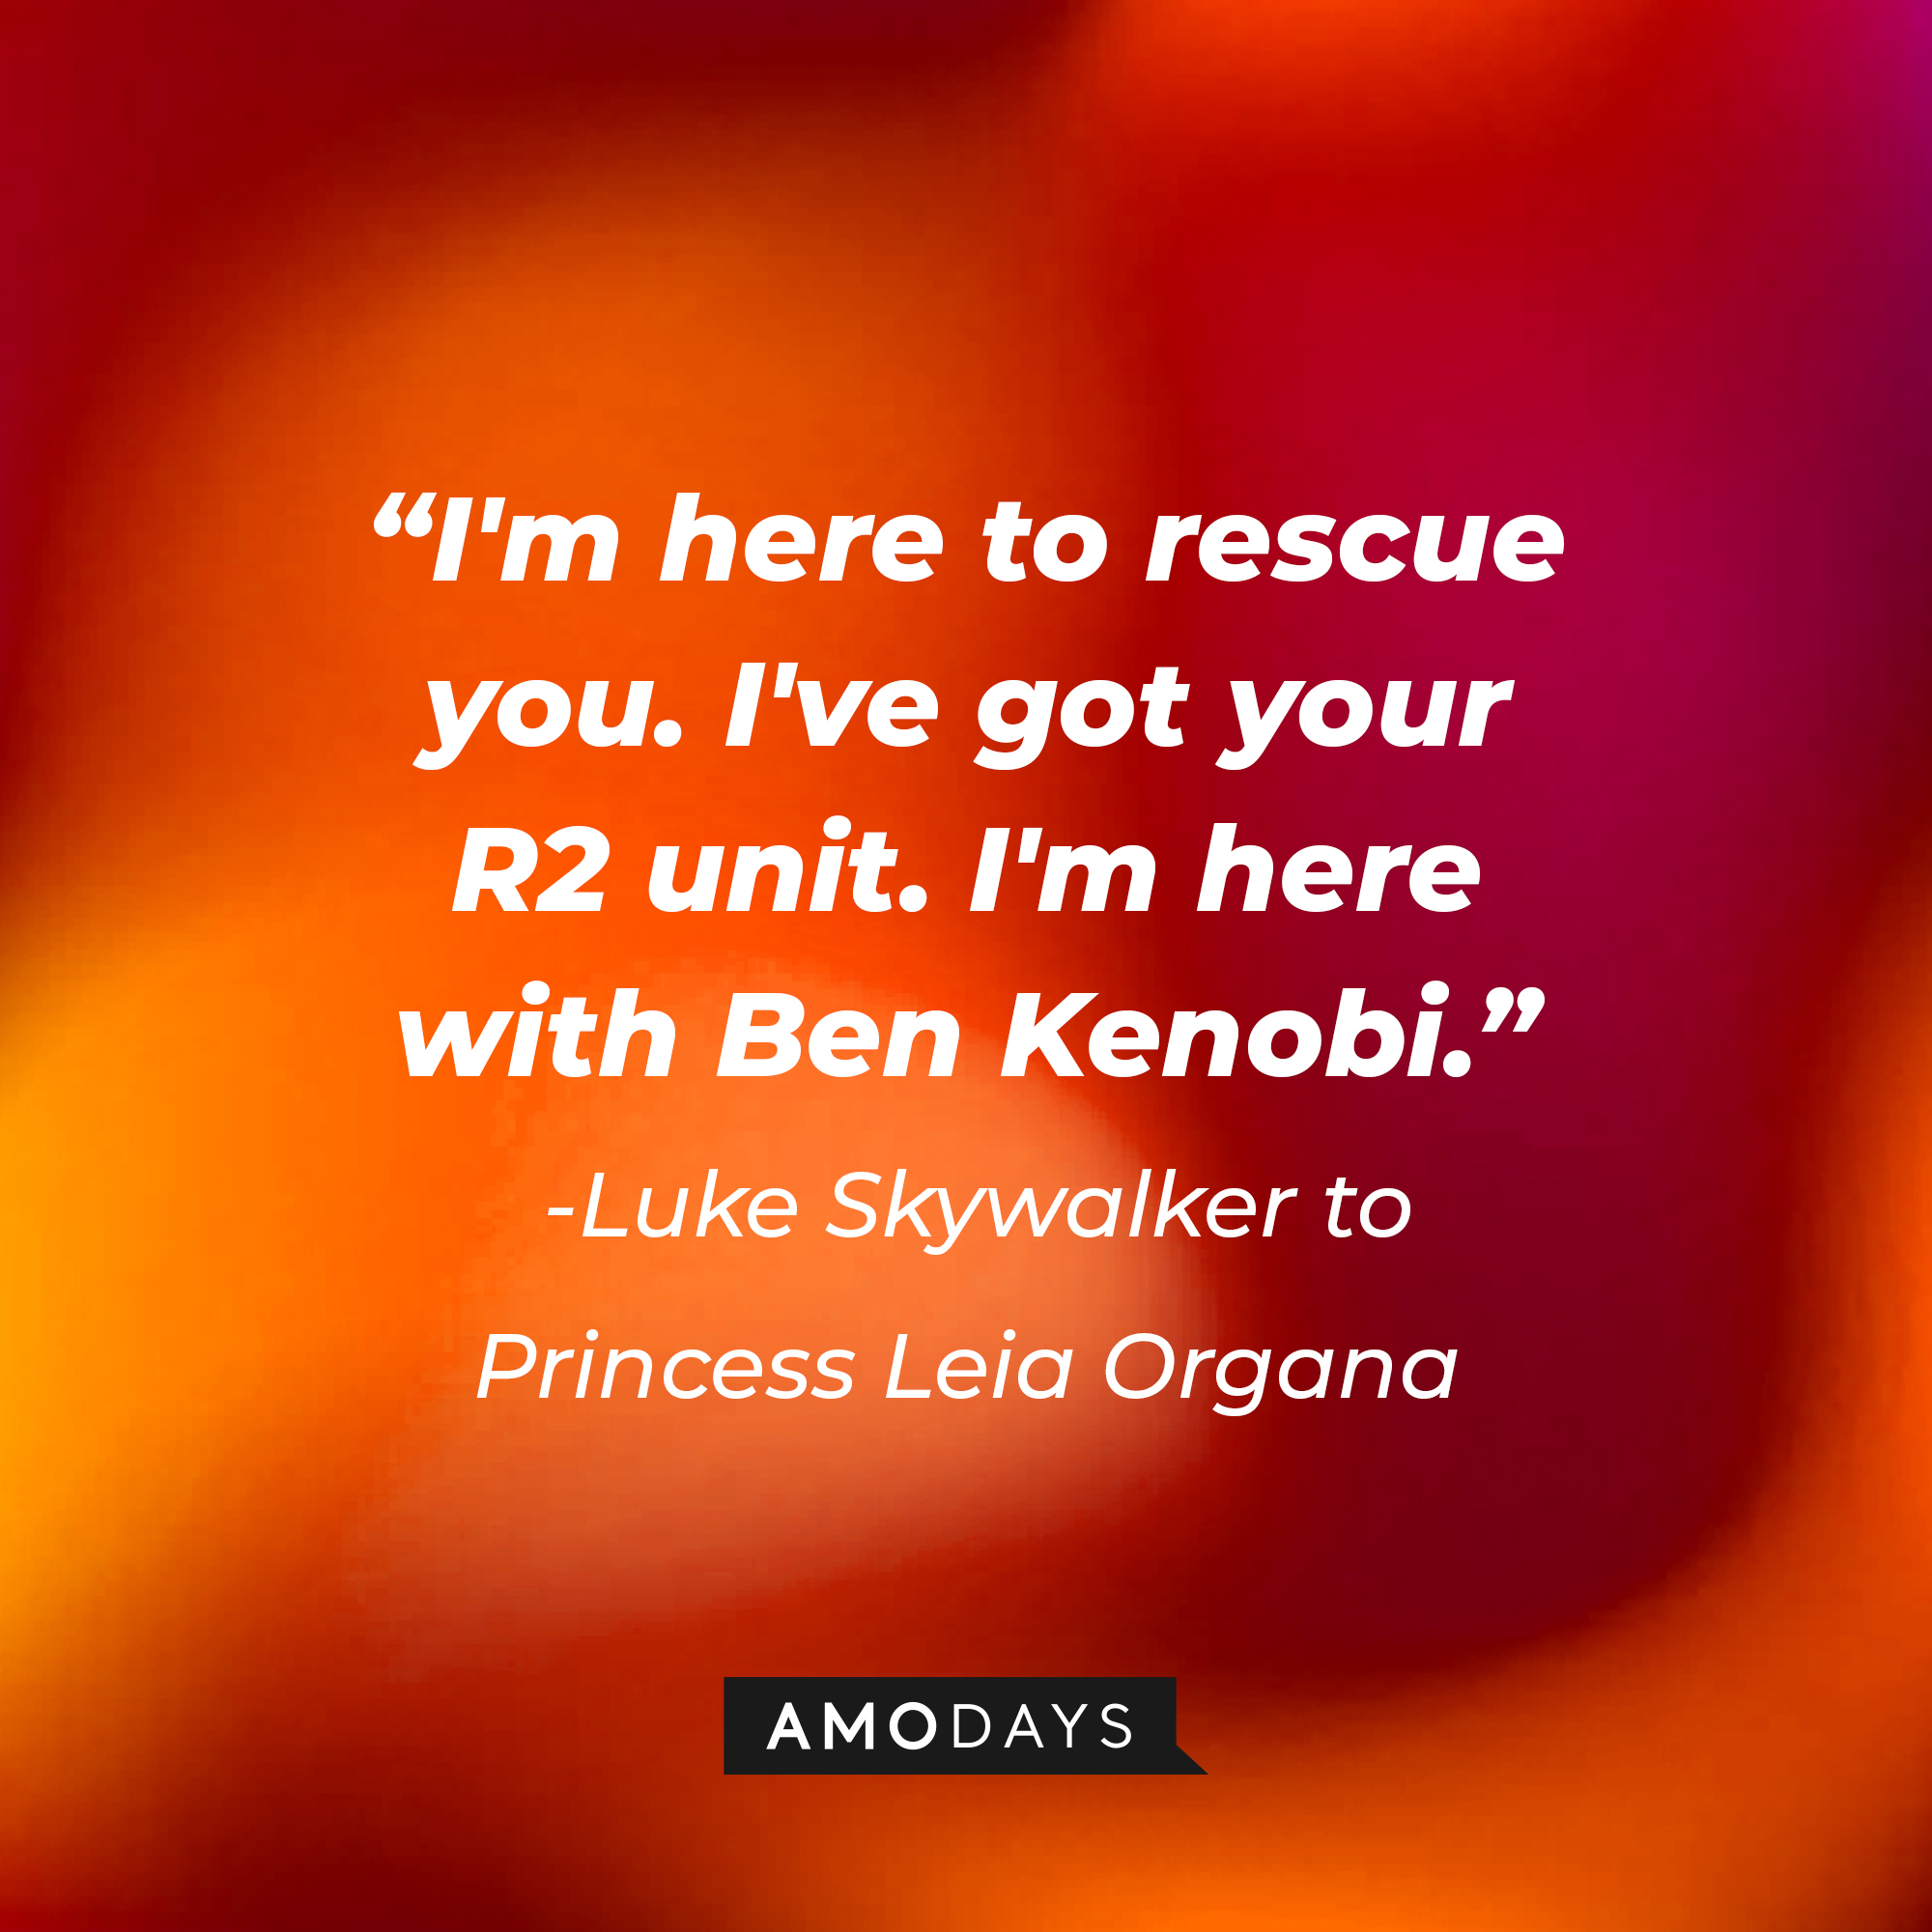 Luke Skywalker's quote to Princess Leia Organa: "I'm here to rescue you. I've got your R2 unit. I'm here with Ben Kenobi." | Source: AmoDays